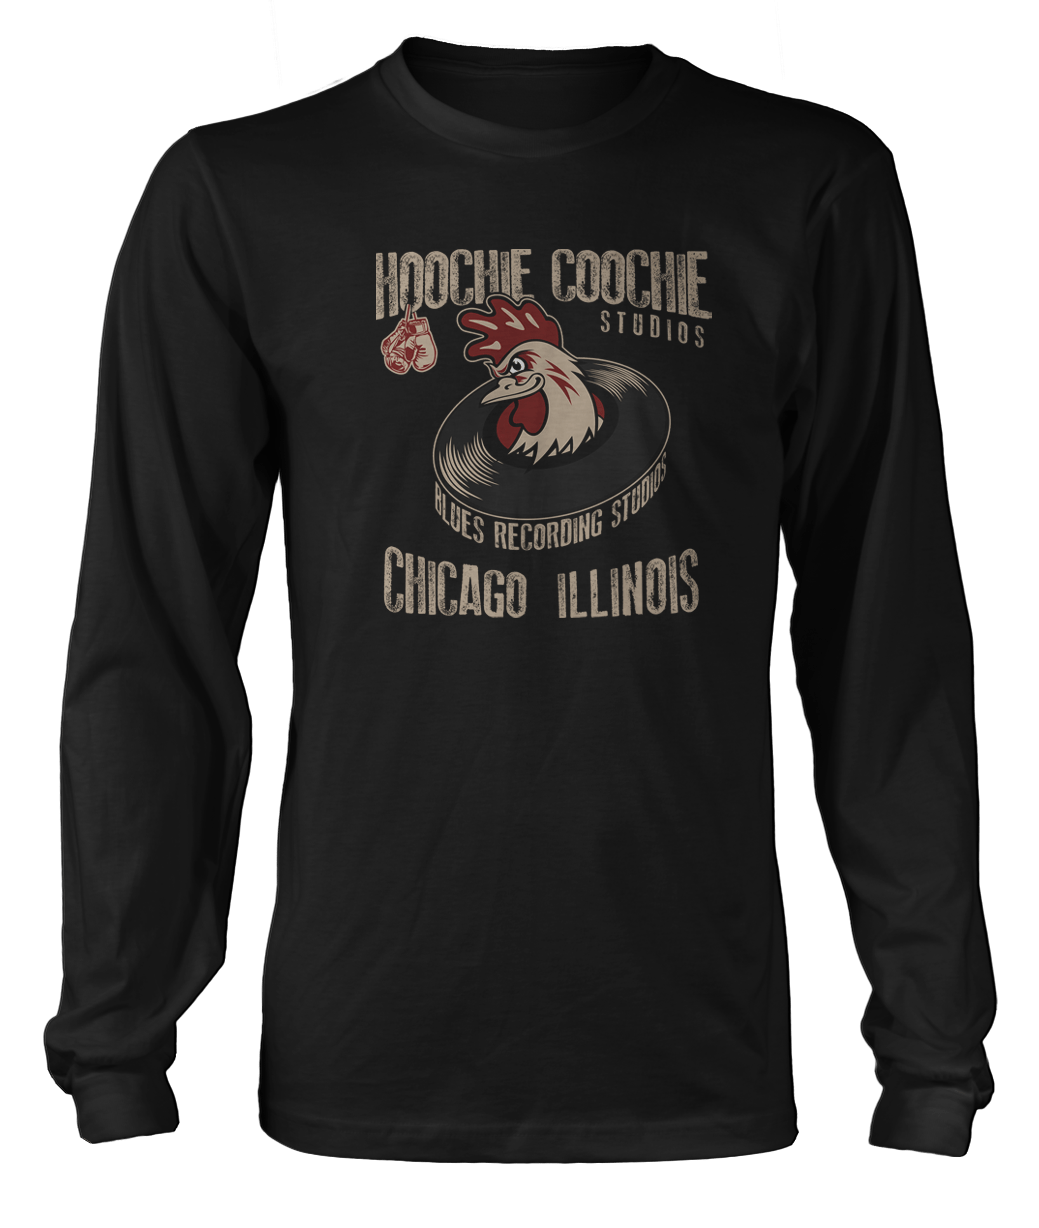 WILLIE DIXON inspired Hoochie Coochie T-Shirt | bathroomwall